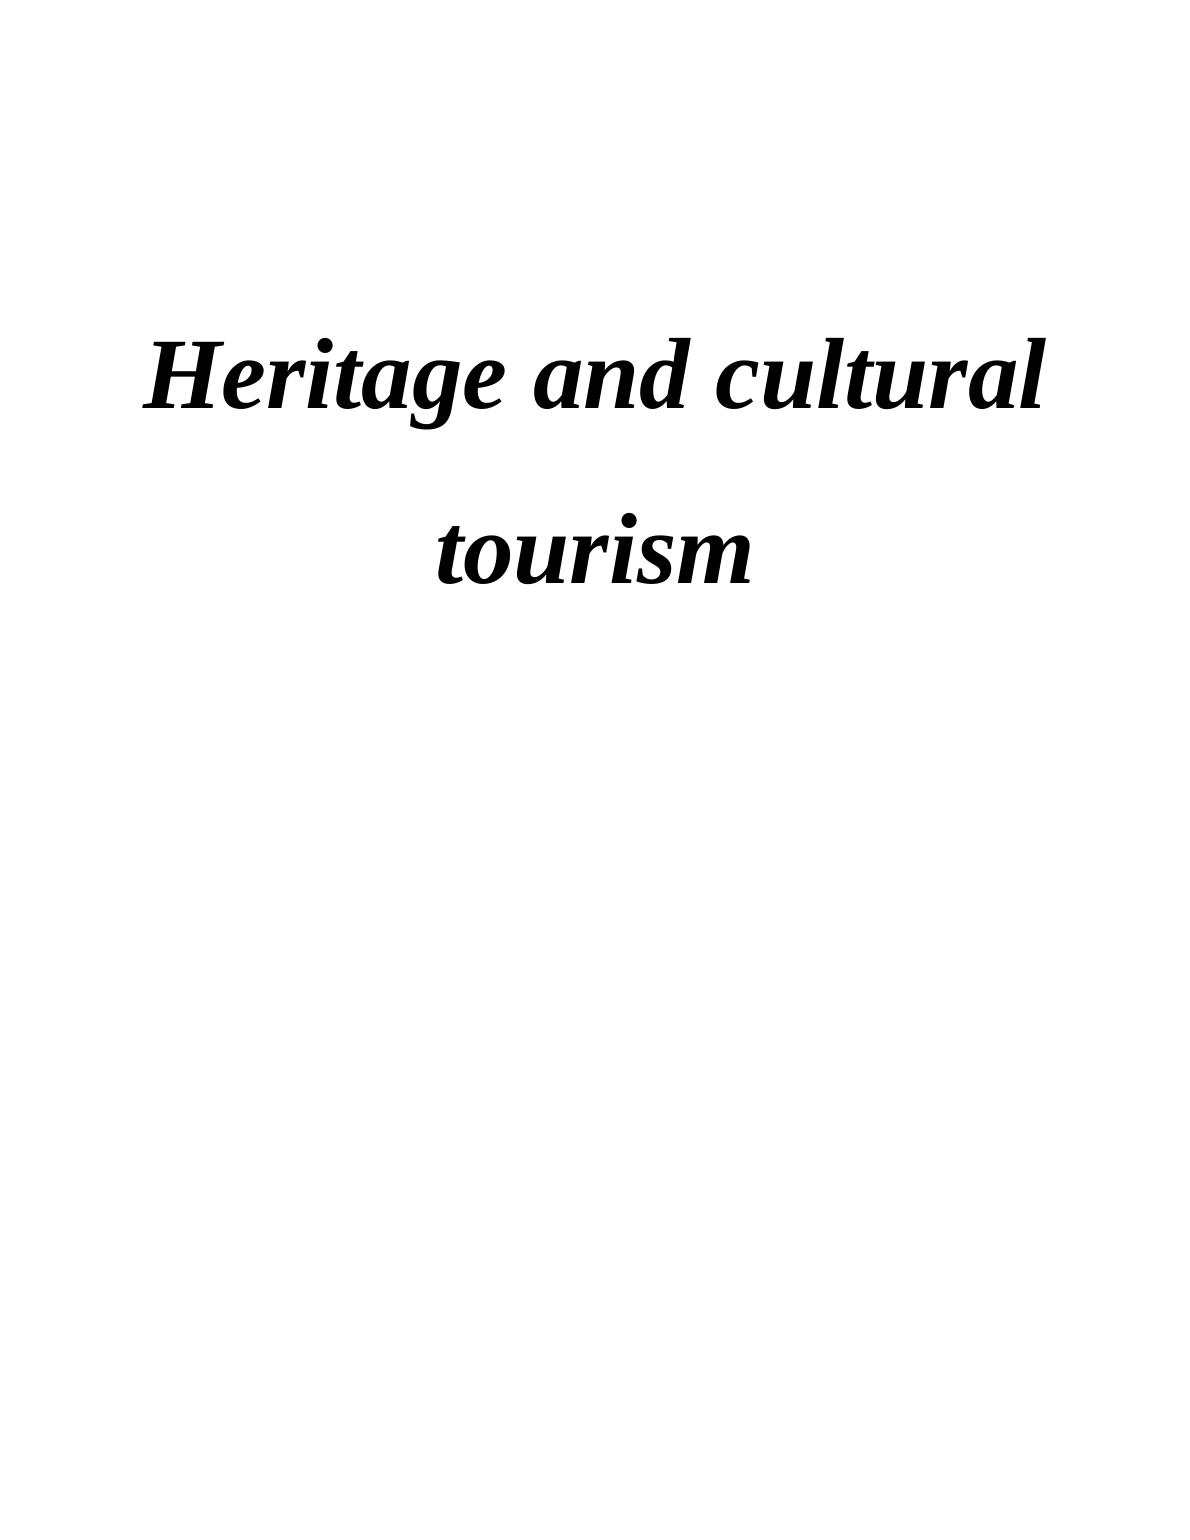 Heritage & Cultural Tourism Management Essay_1